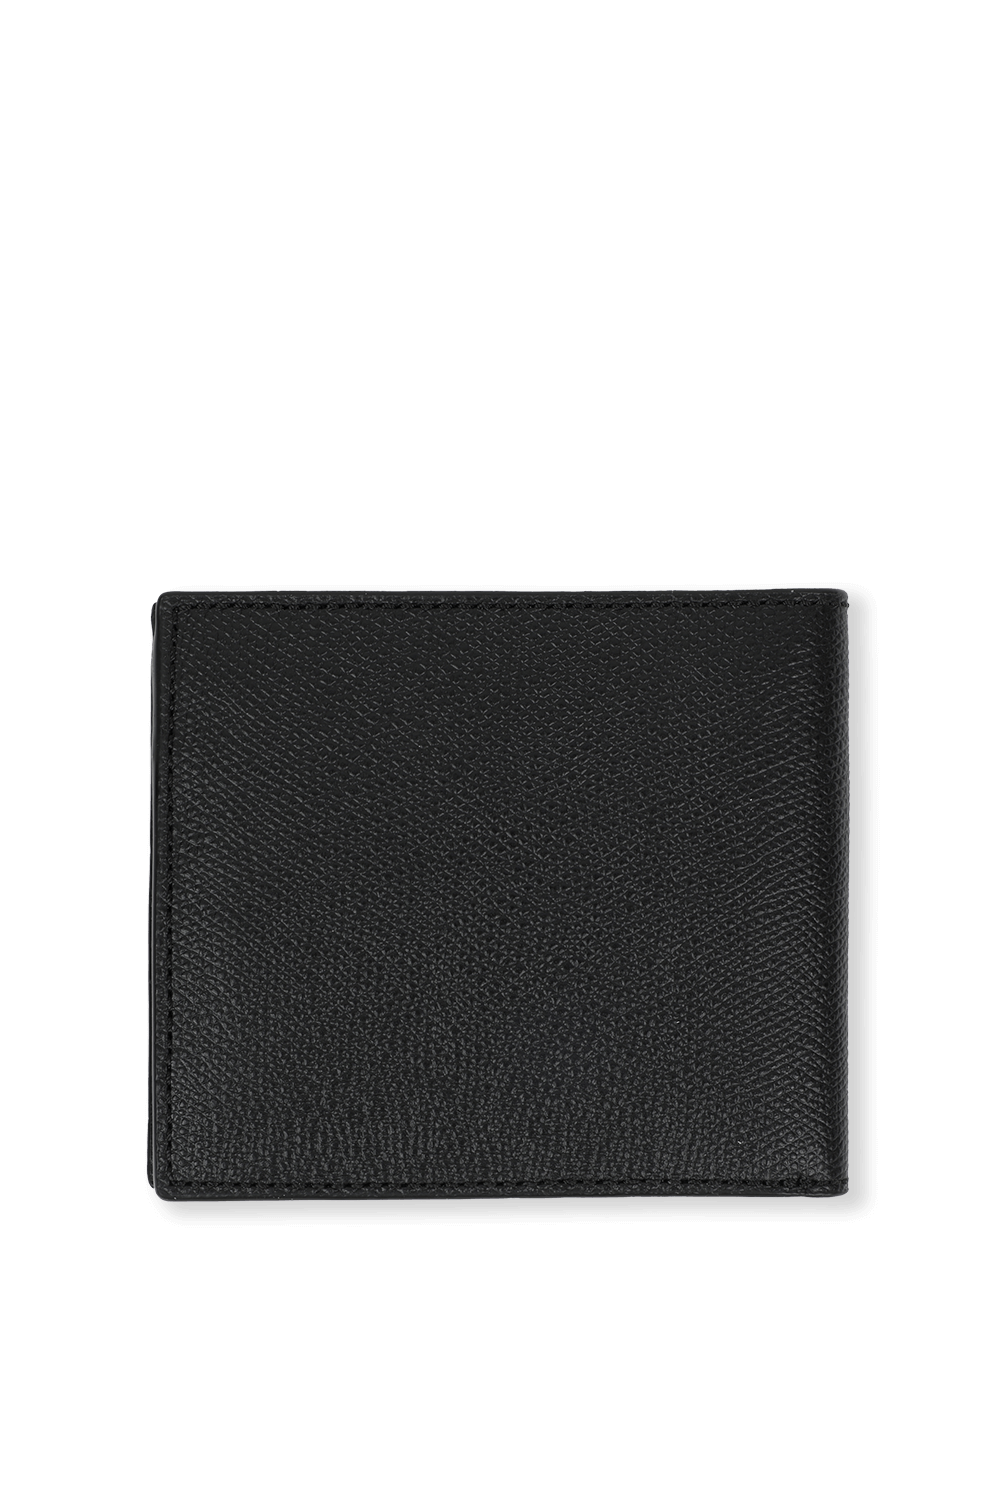 Business Leather Wallet in Black TOMMY HILFIGER